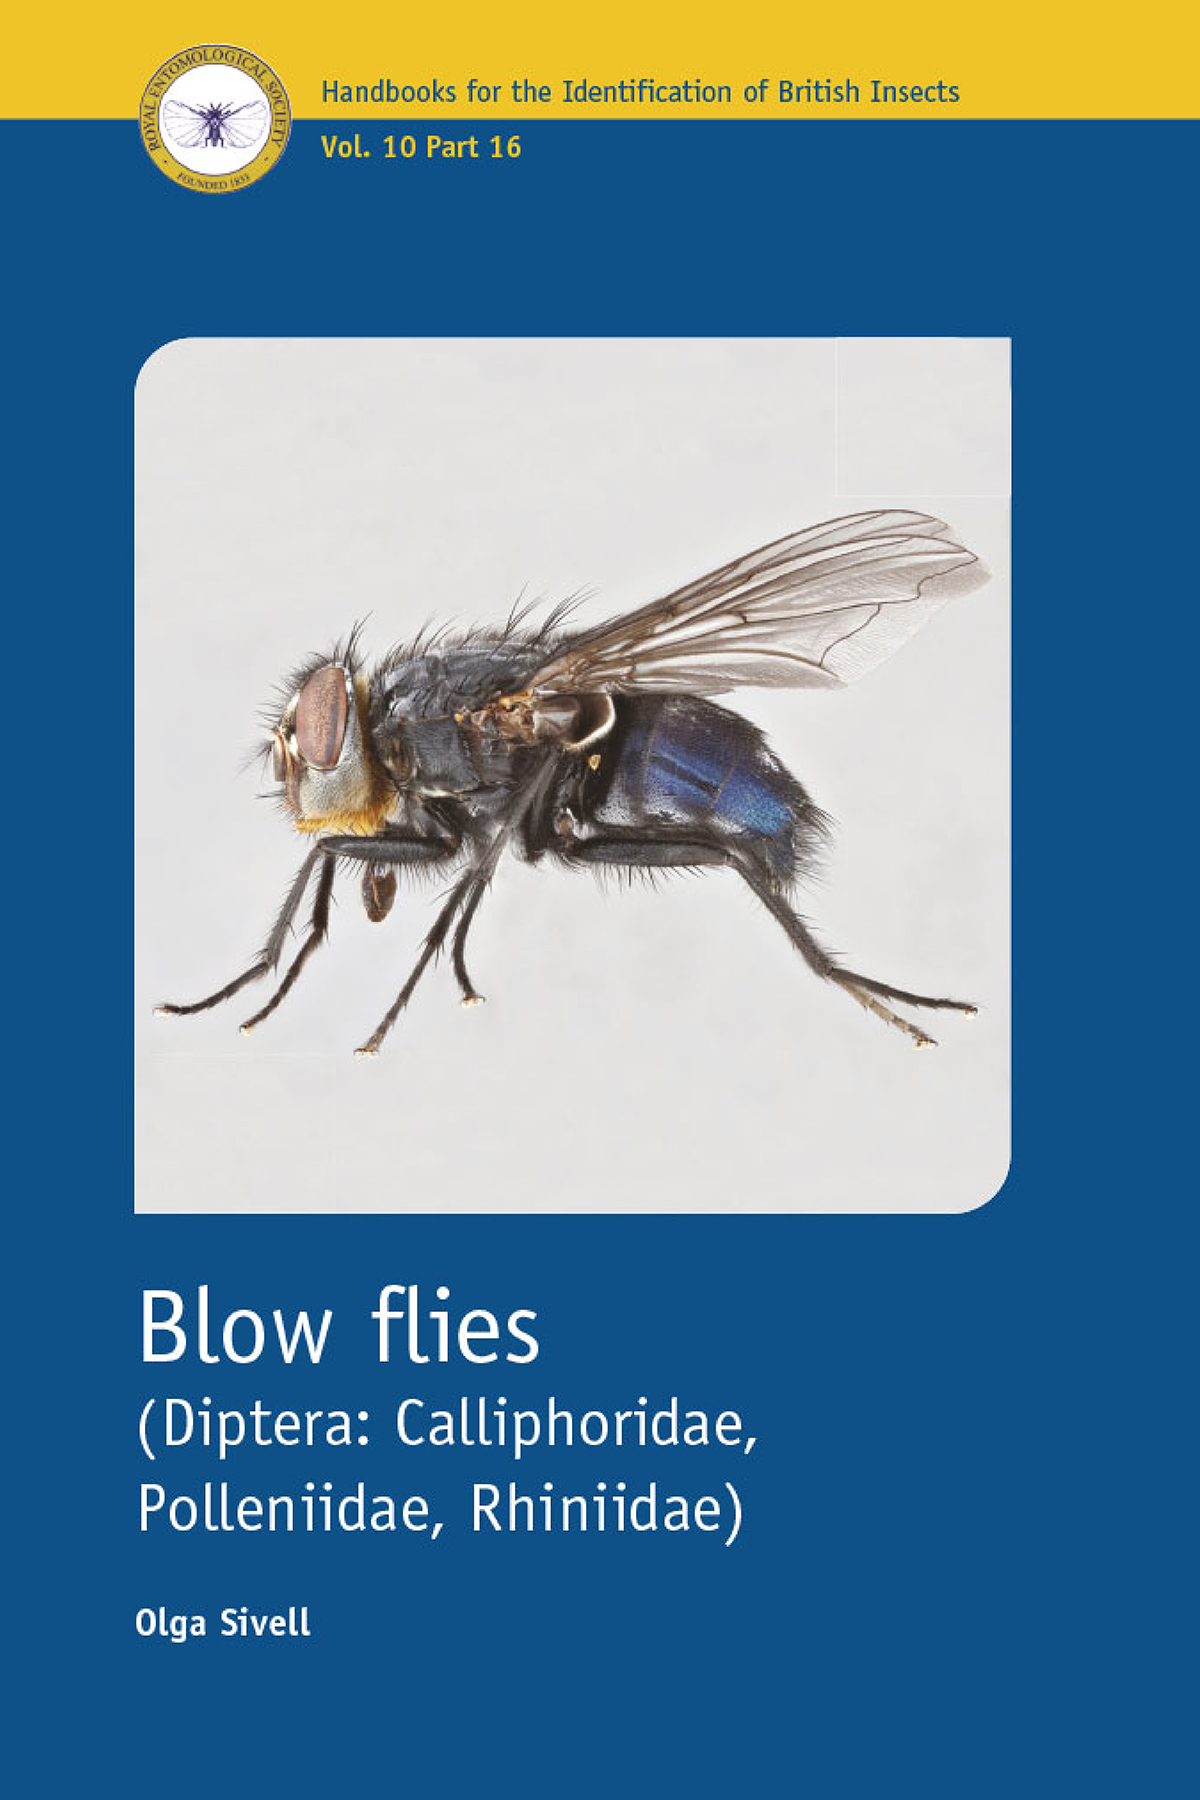 Sivell, O. - Blow flies (Diptera: Calliphoridae, Polleniidae, Rhiniidae) (Handbooks for the Identification of British Insects Vol. 10, Pt 16)